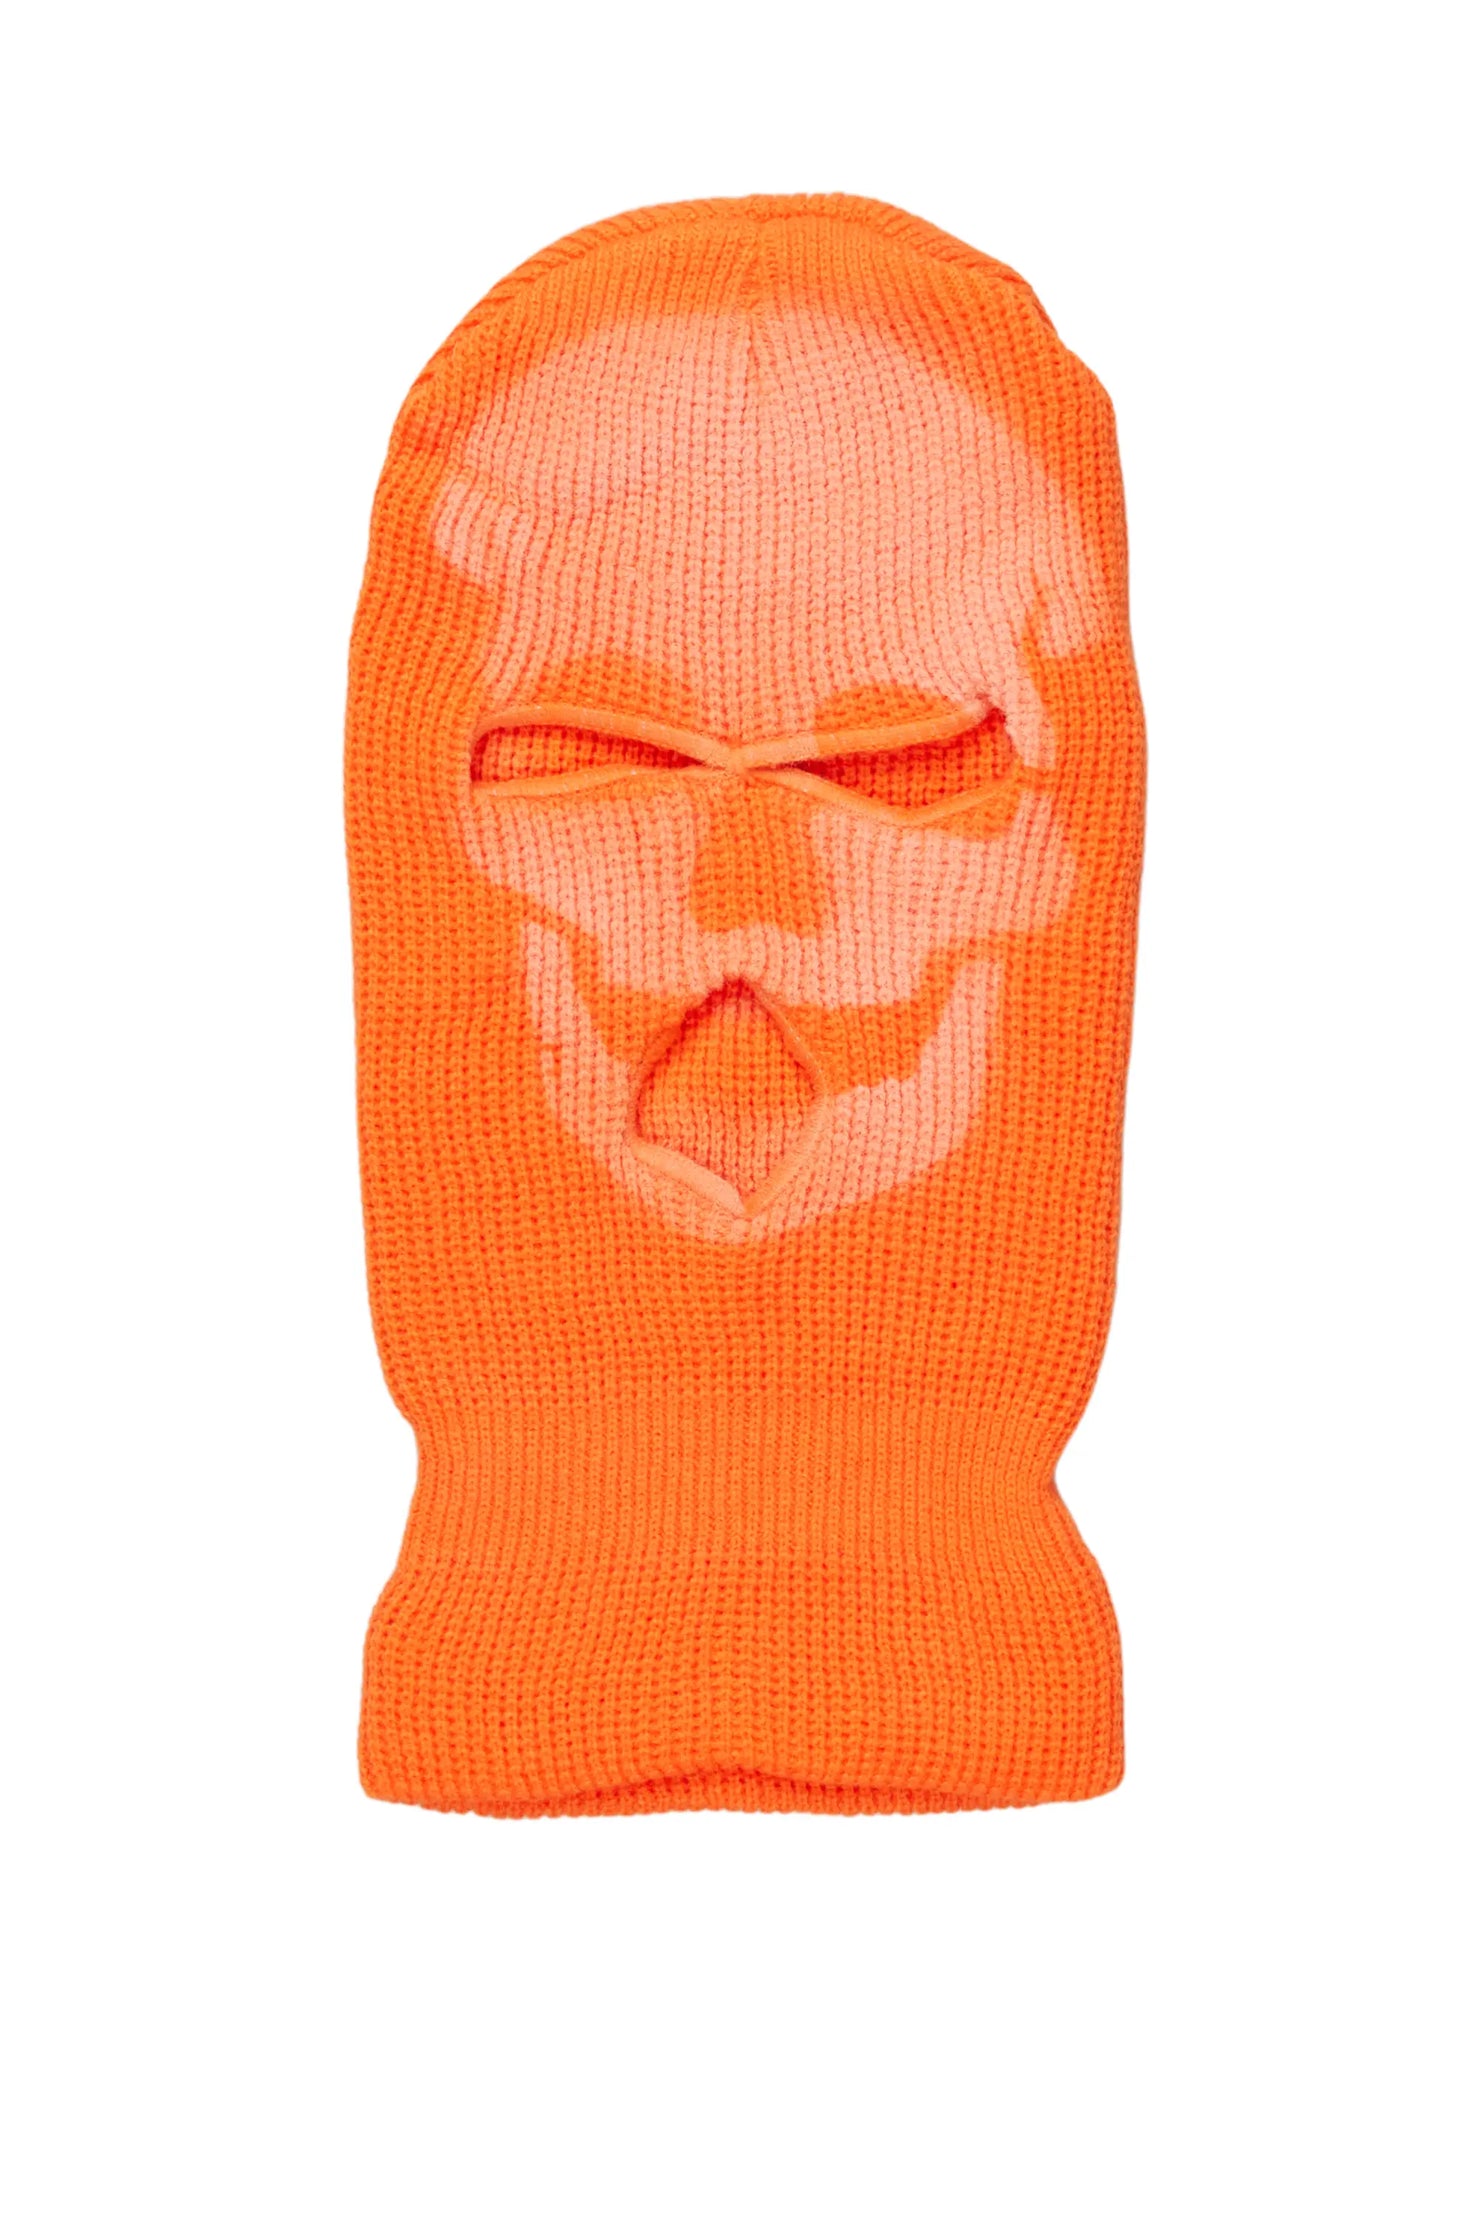 Batu Orange Graphic Ski Mask